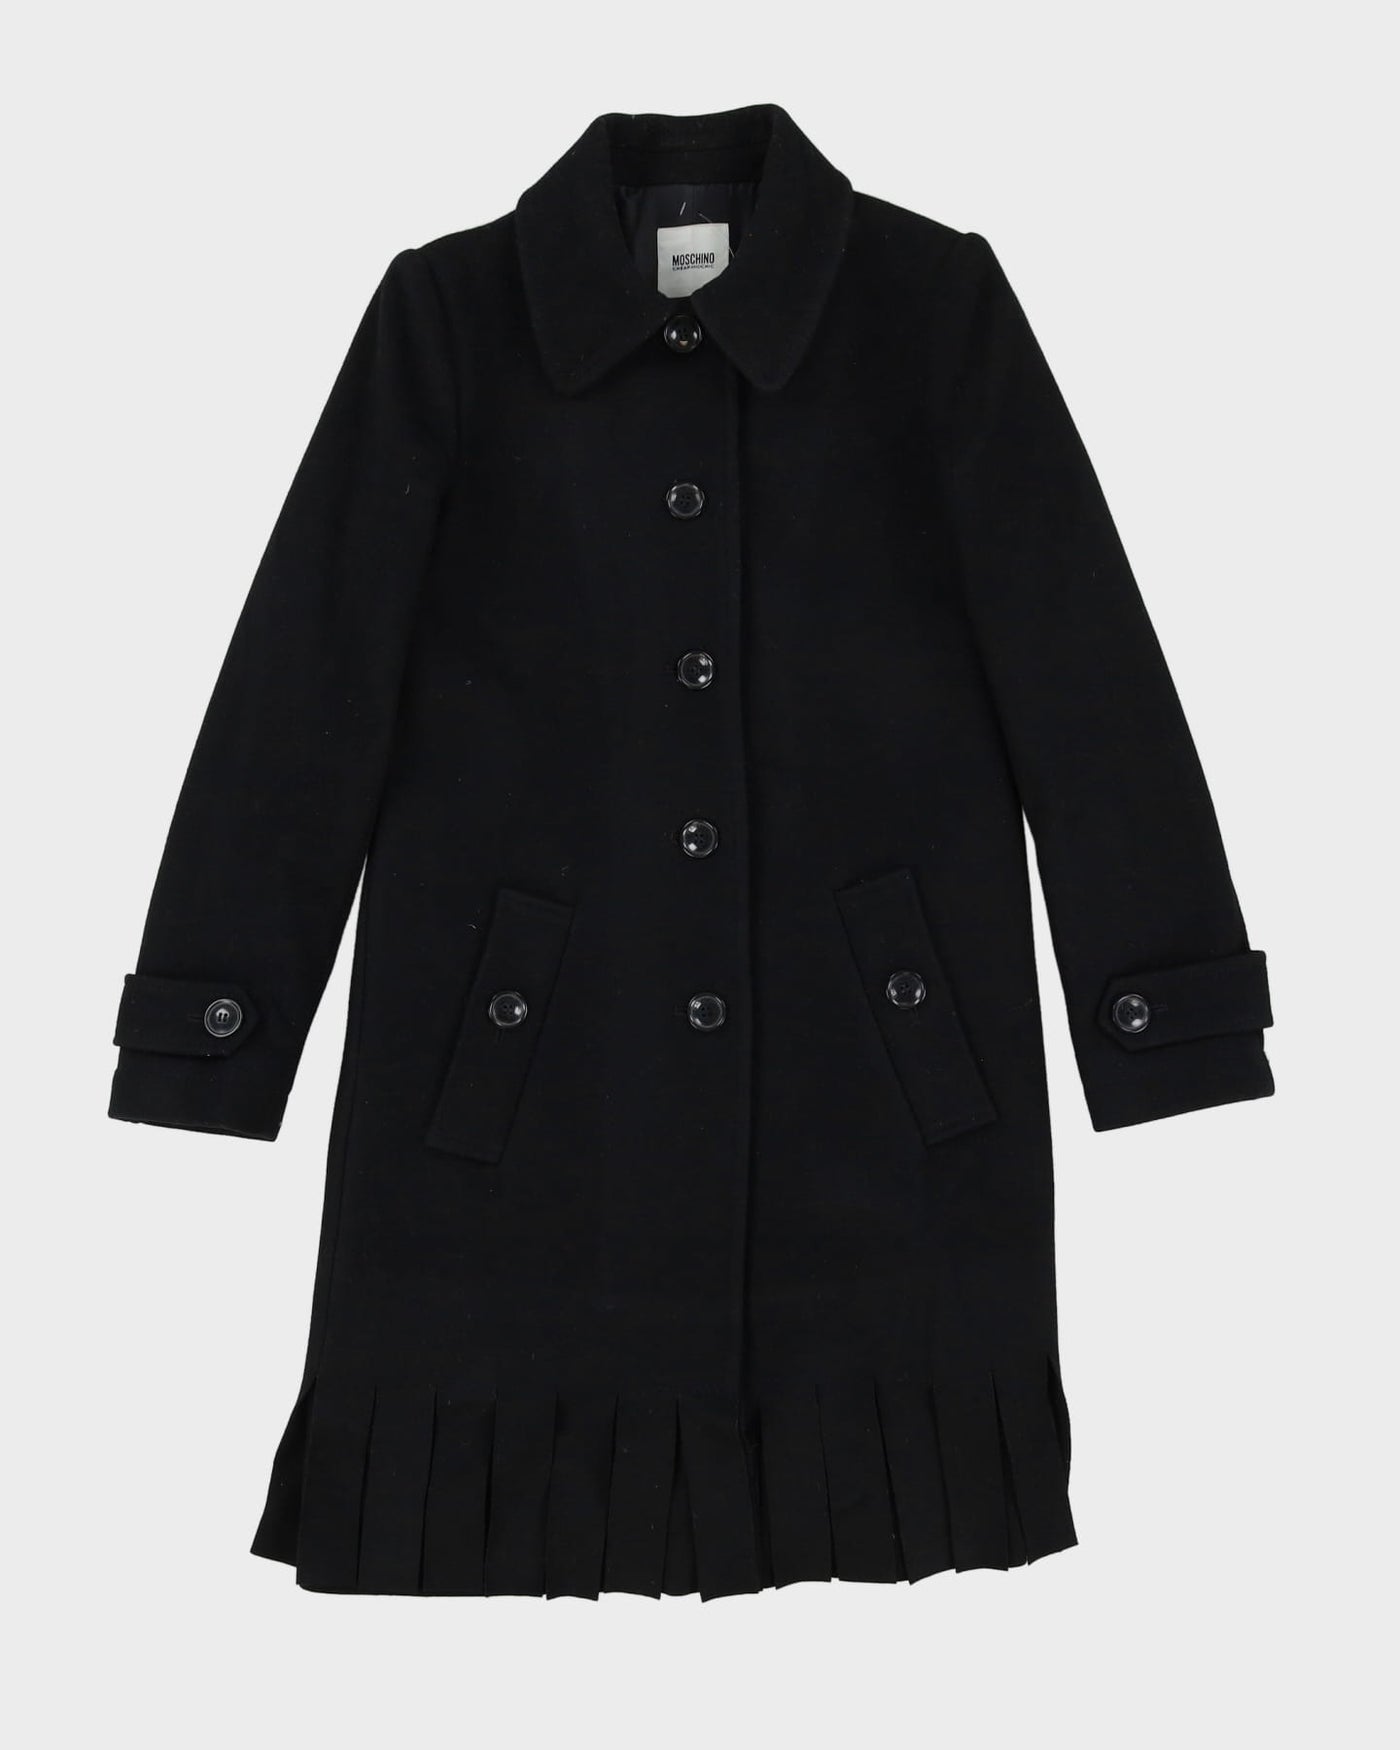 Moschino Cheap And Chic Fringed Black Overcoat - XS